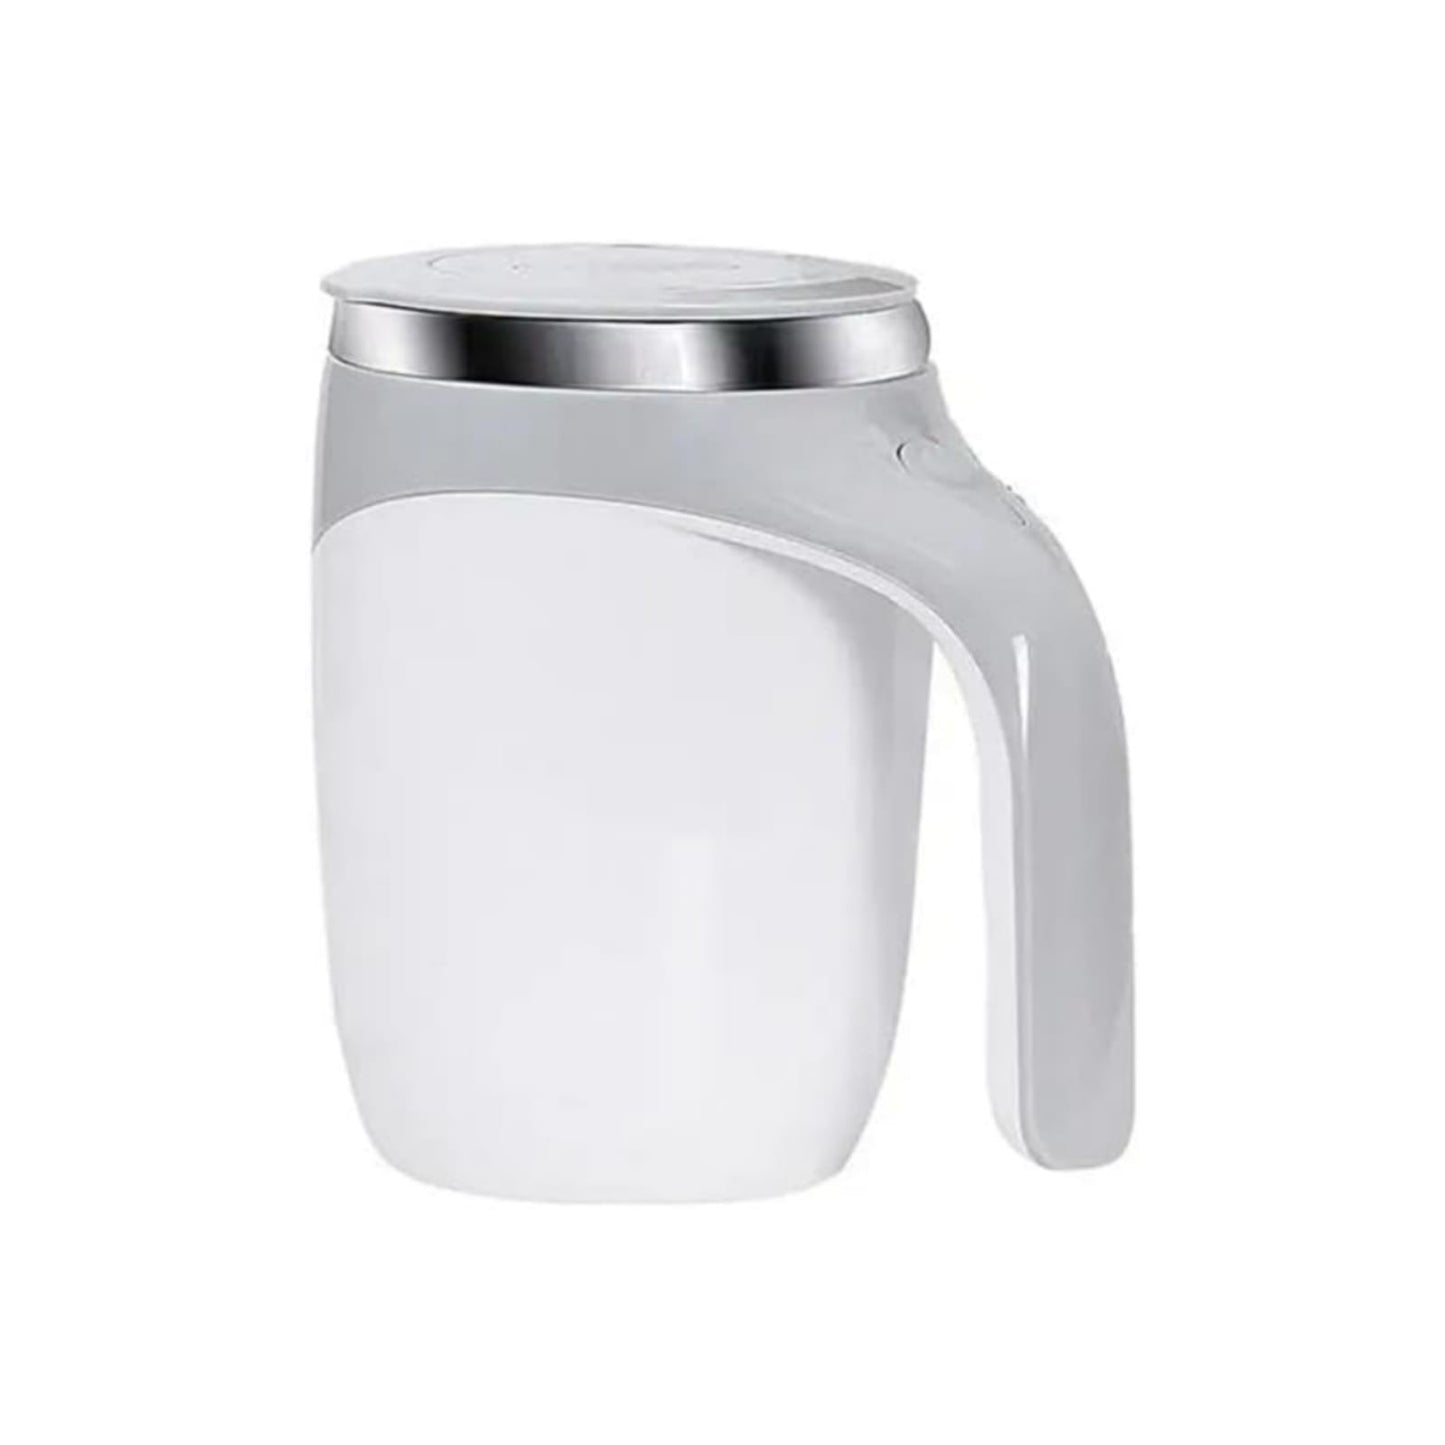 Electric Magnetic Stirring Coffee Mug